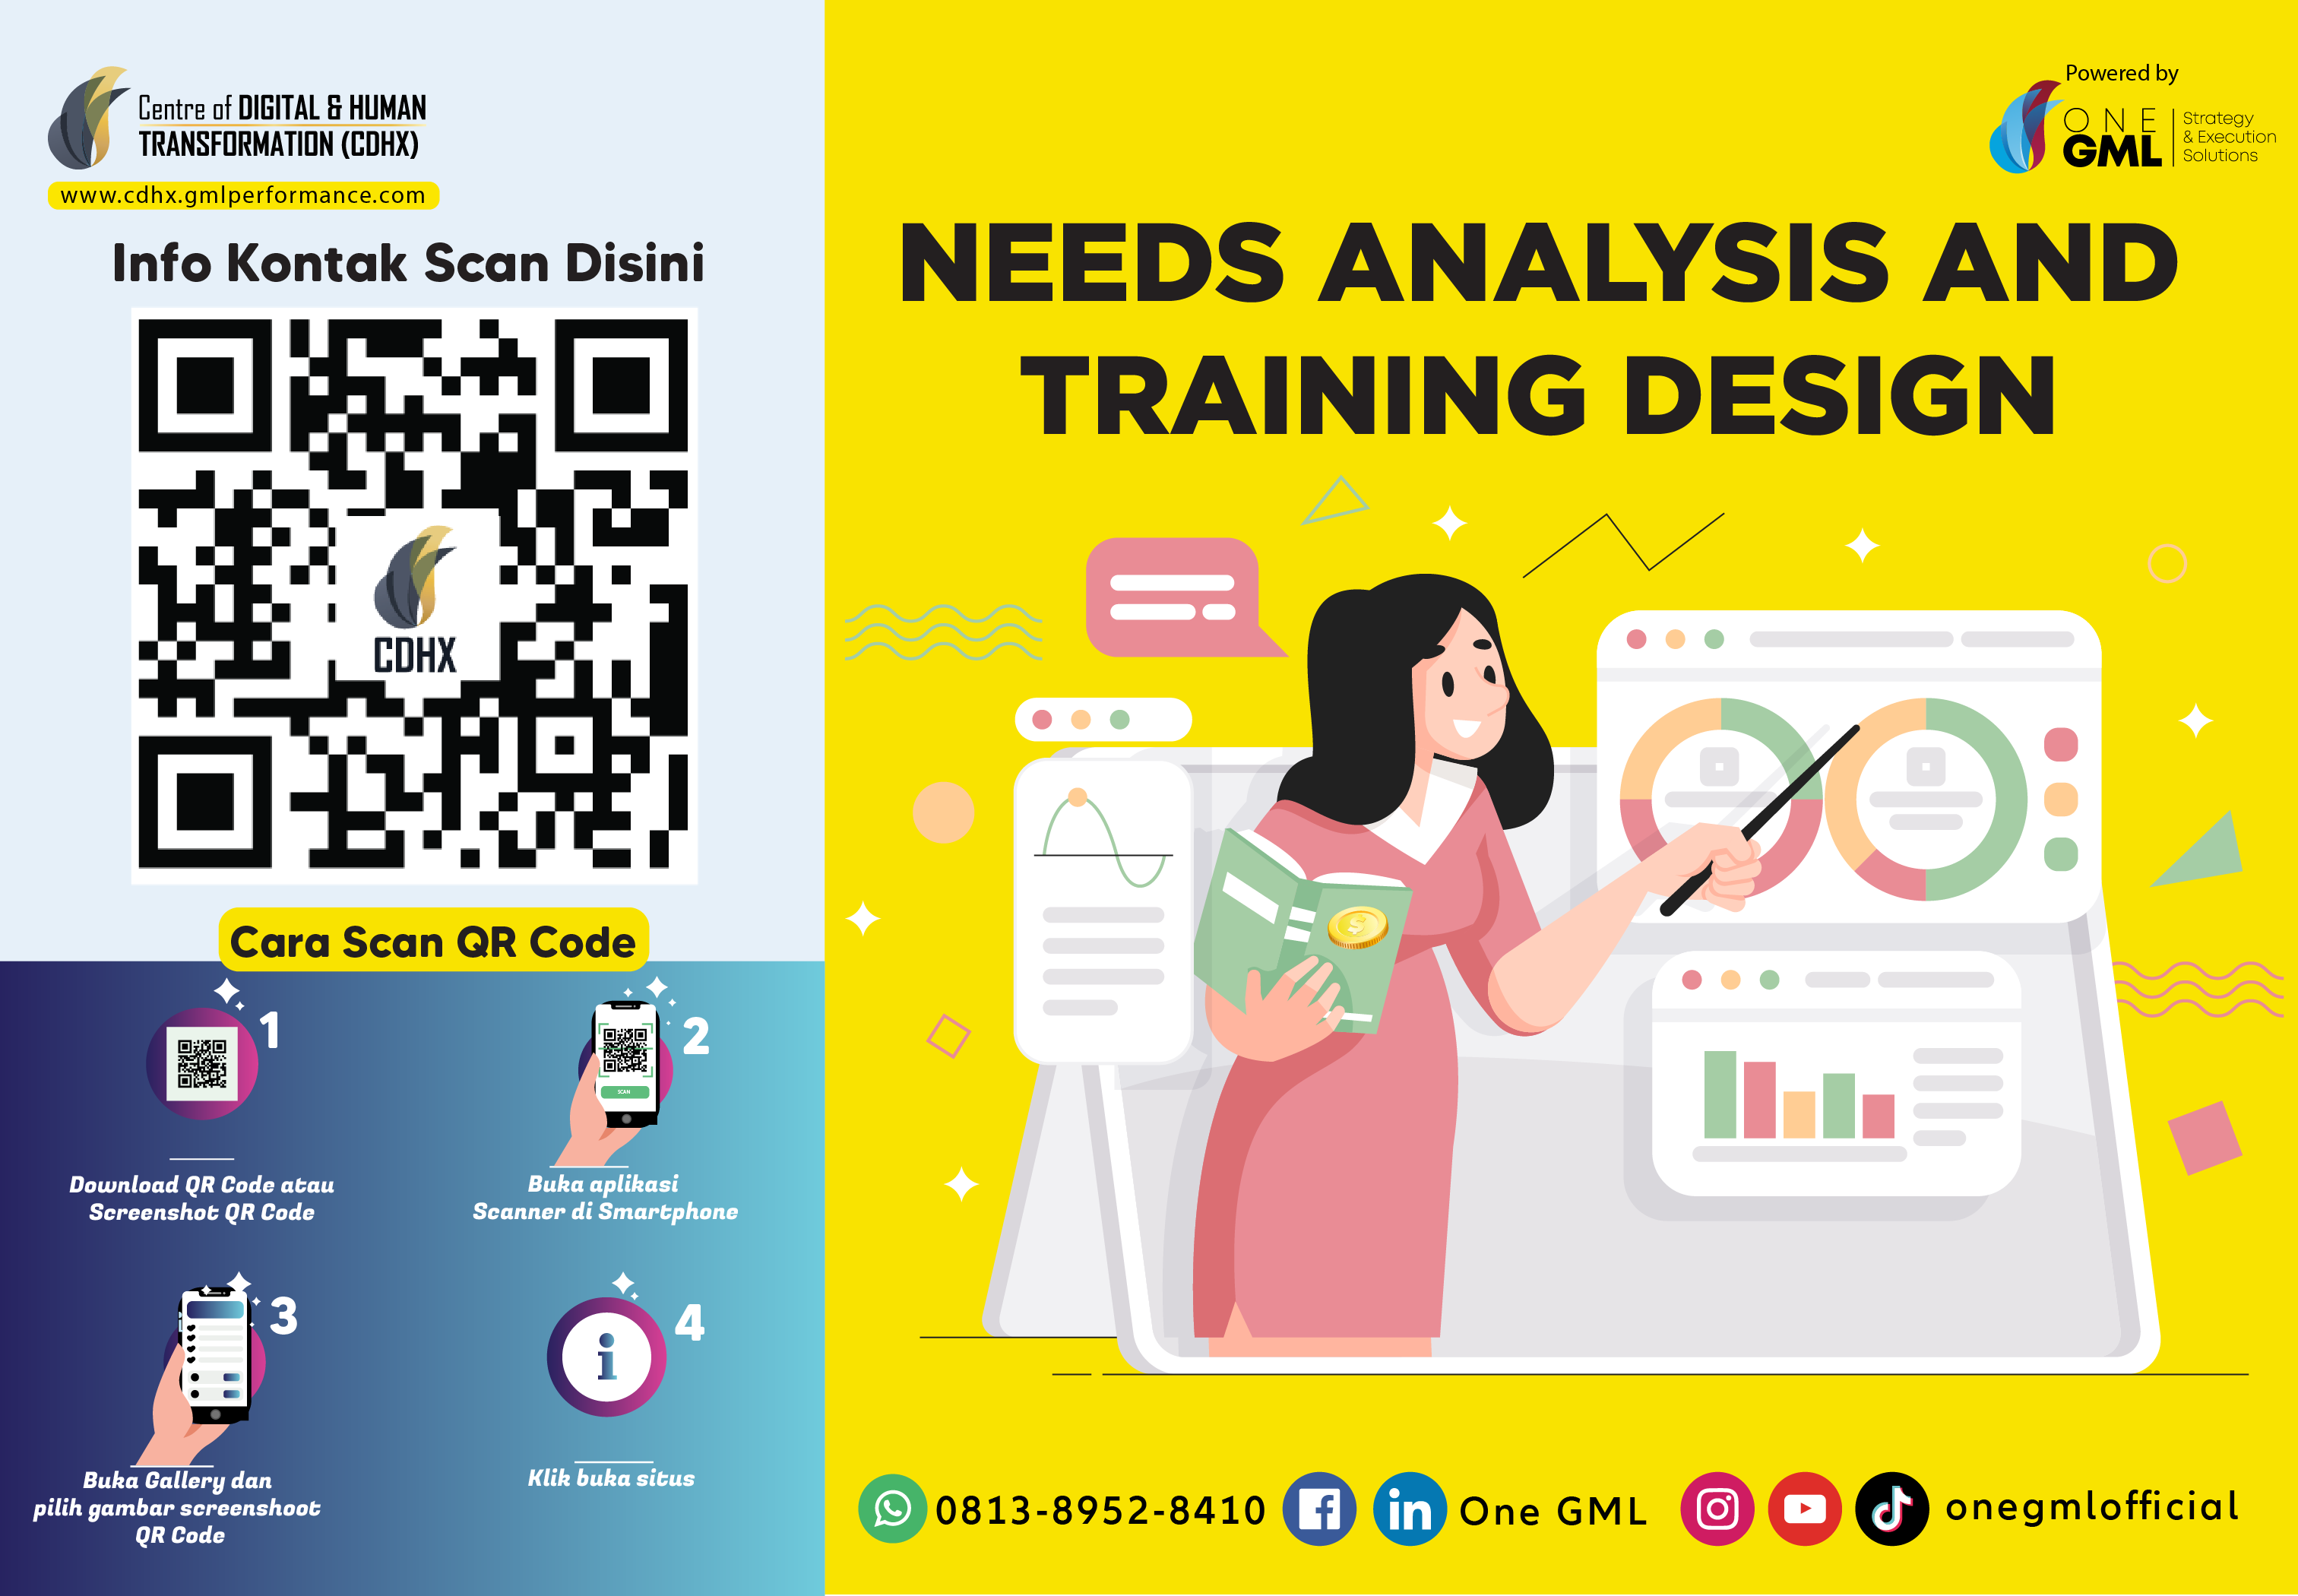 Training Needs Analysis and Training Design